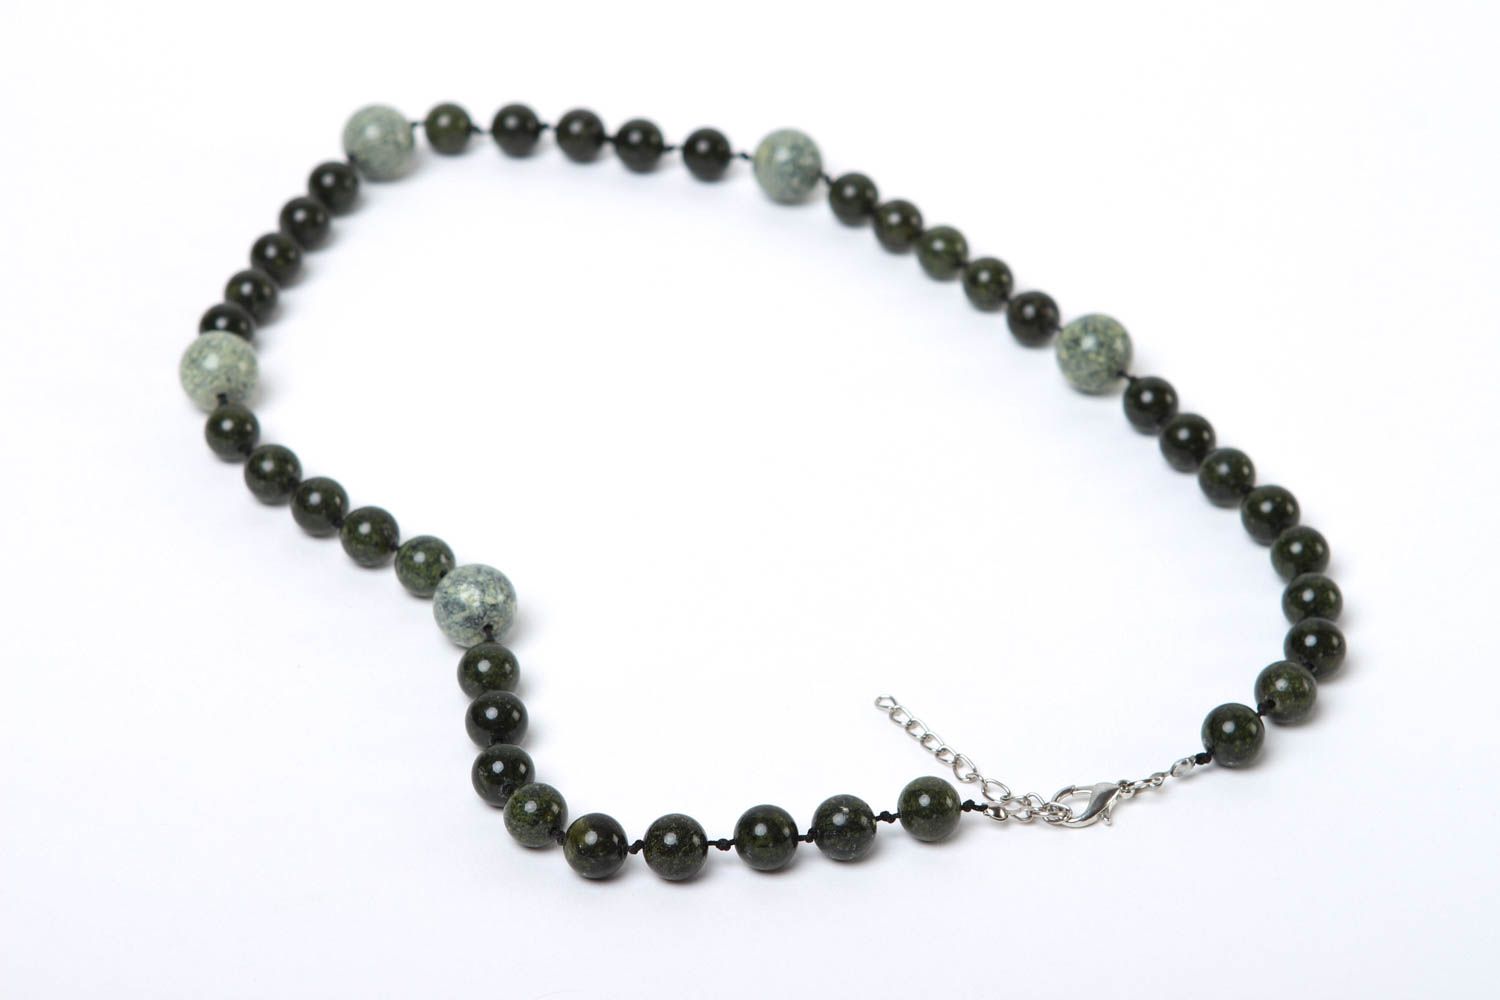 Handmade jewelry designer bead necklace neck accessory stone jewelry gift ideas photo 4